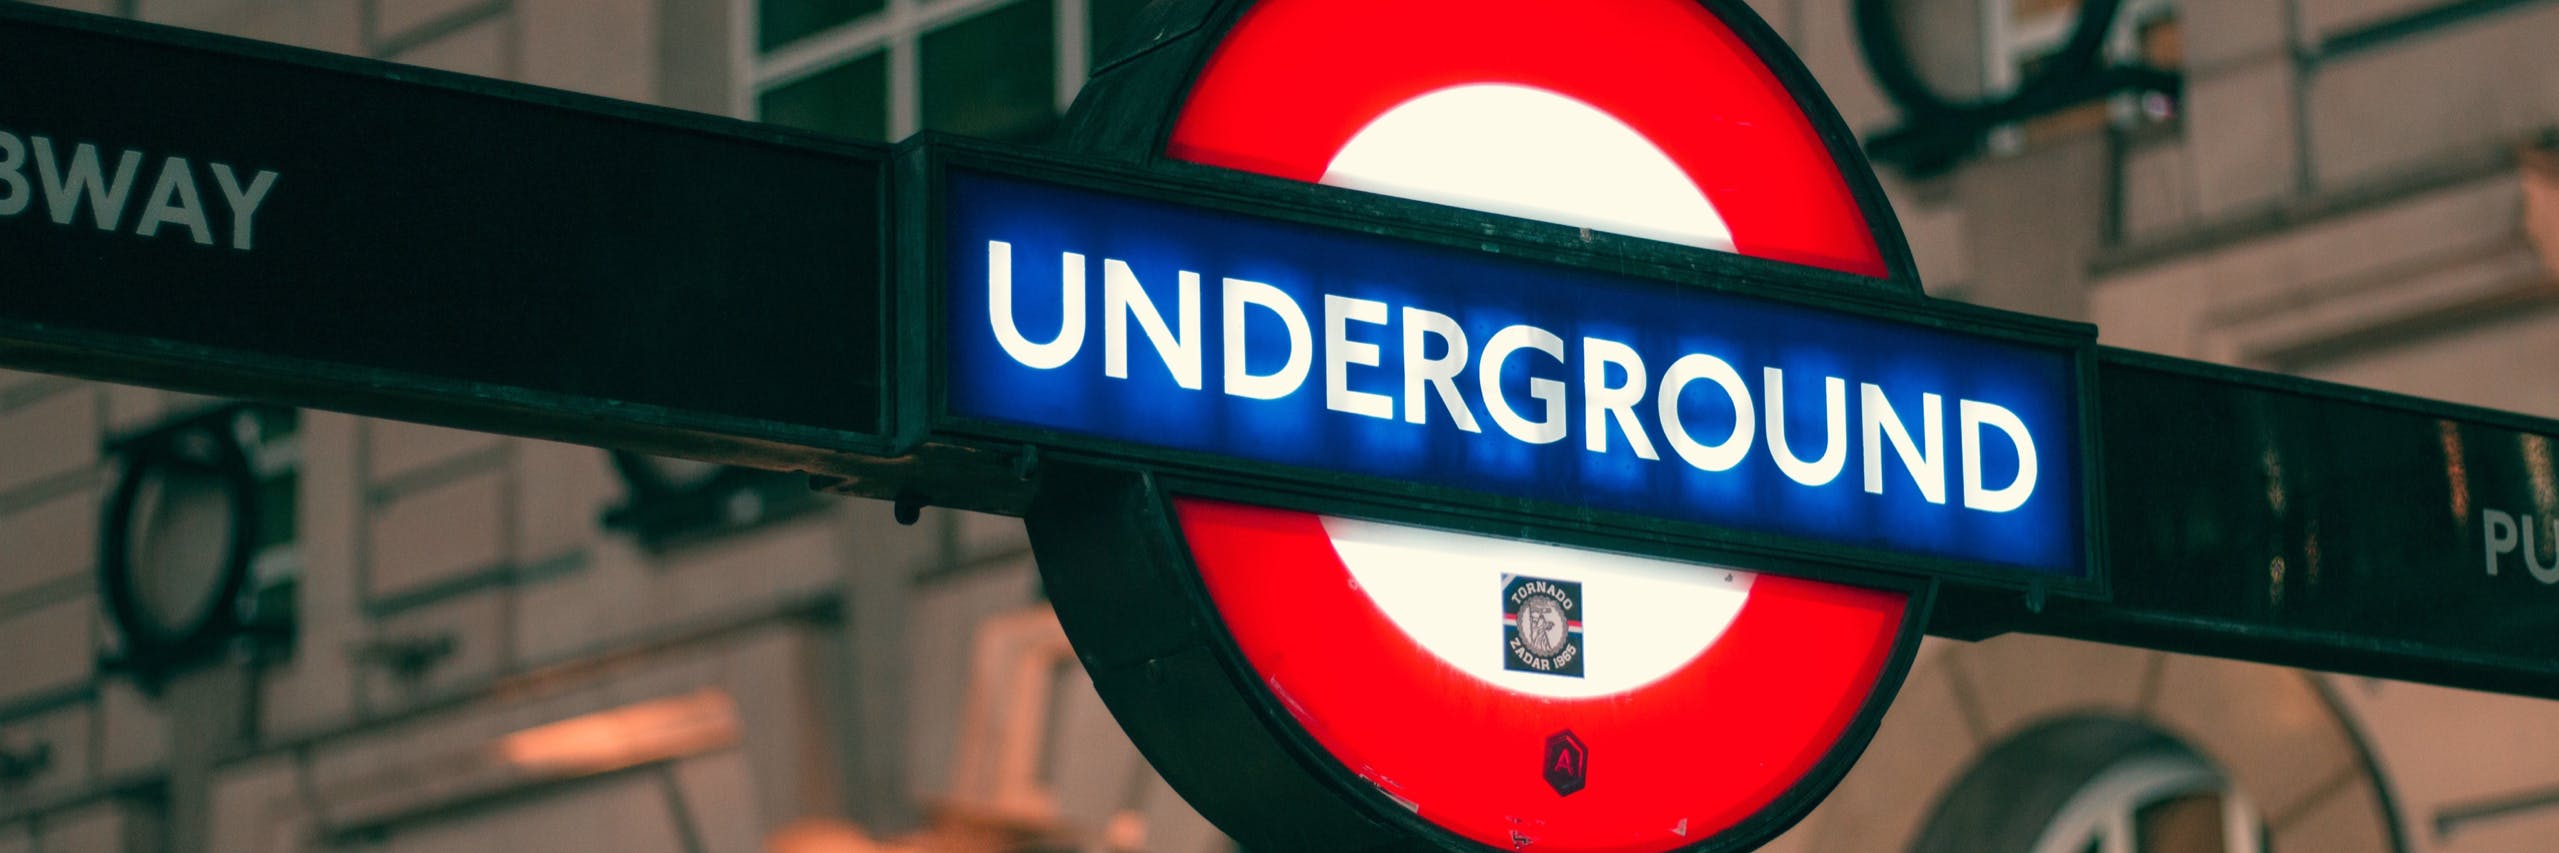 London Underground sign saying Underground